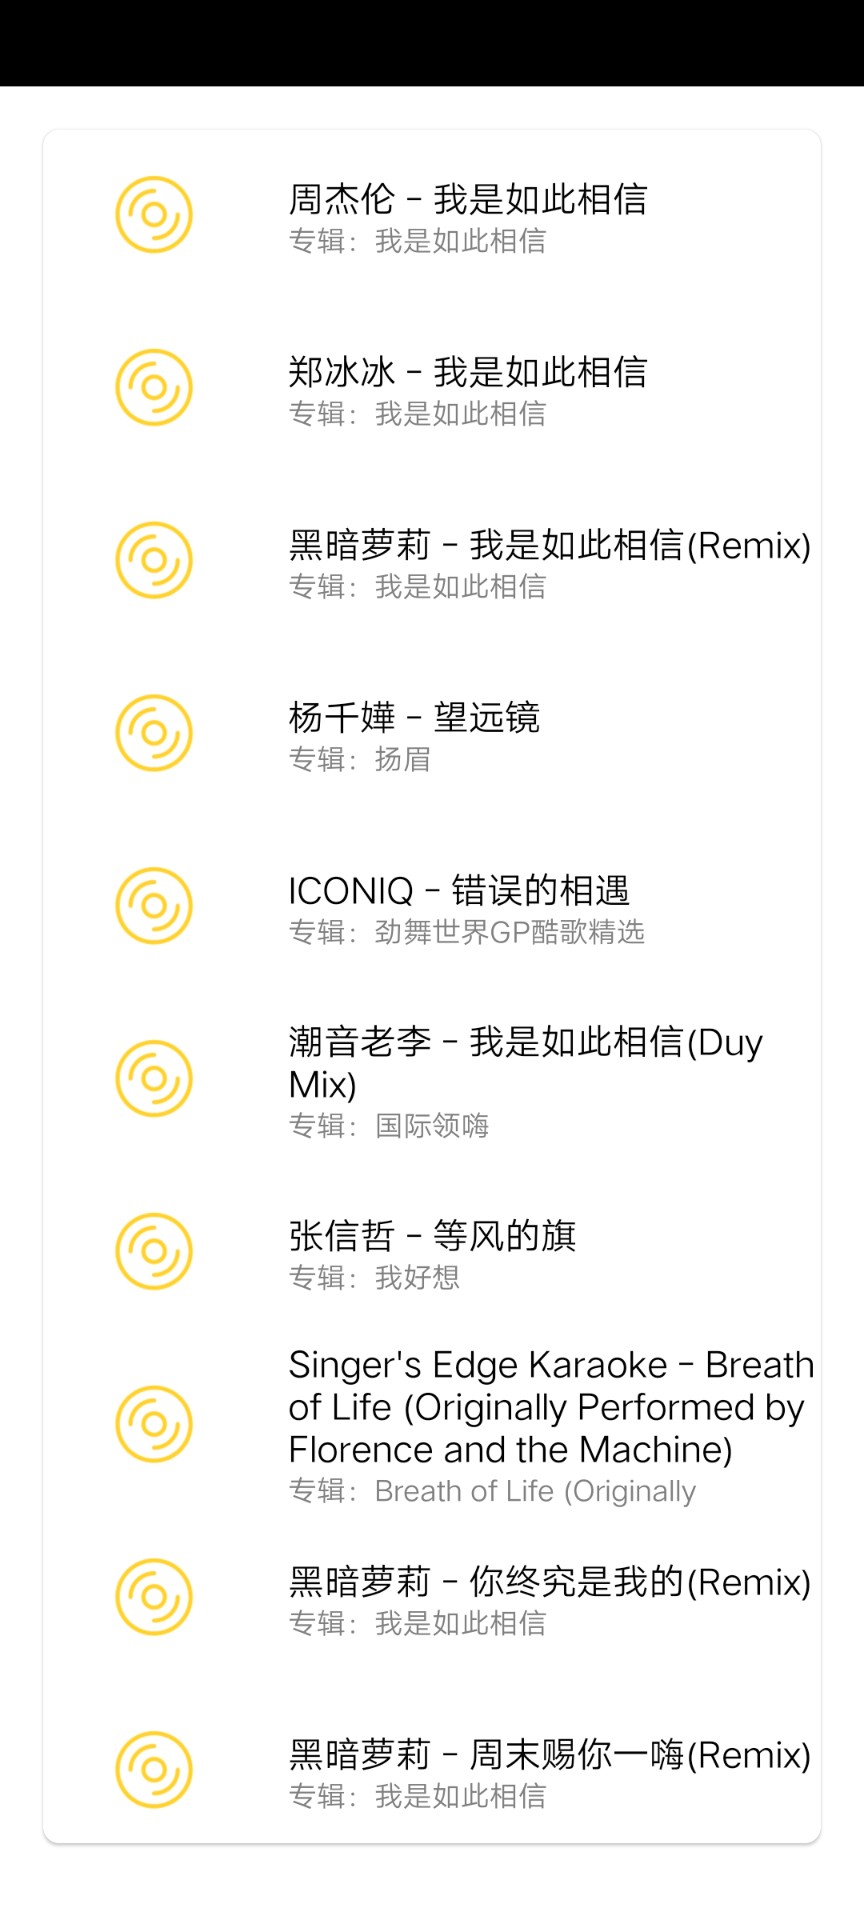 one music中文版官网下载安装到手机-one music中文版app最新版本免费下载 1.5